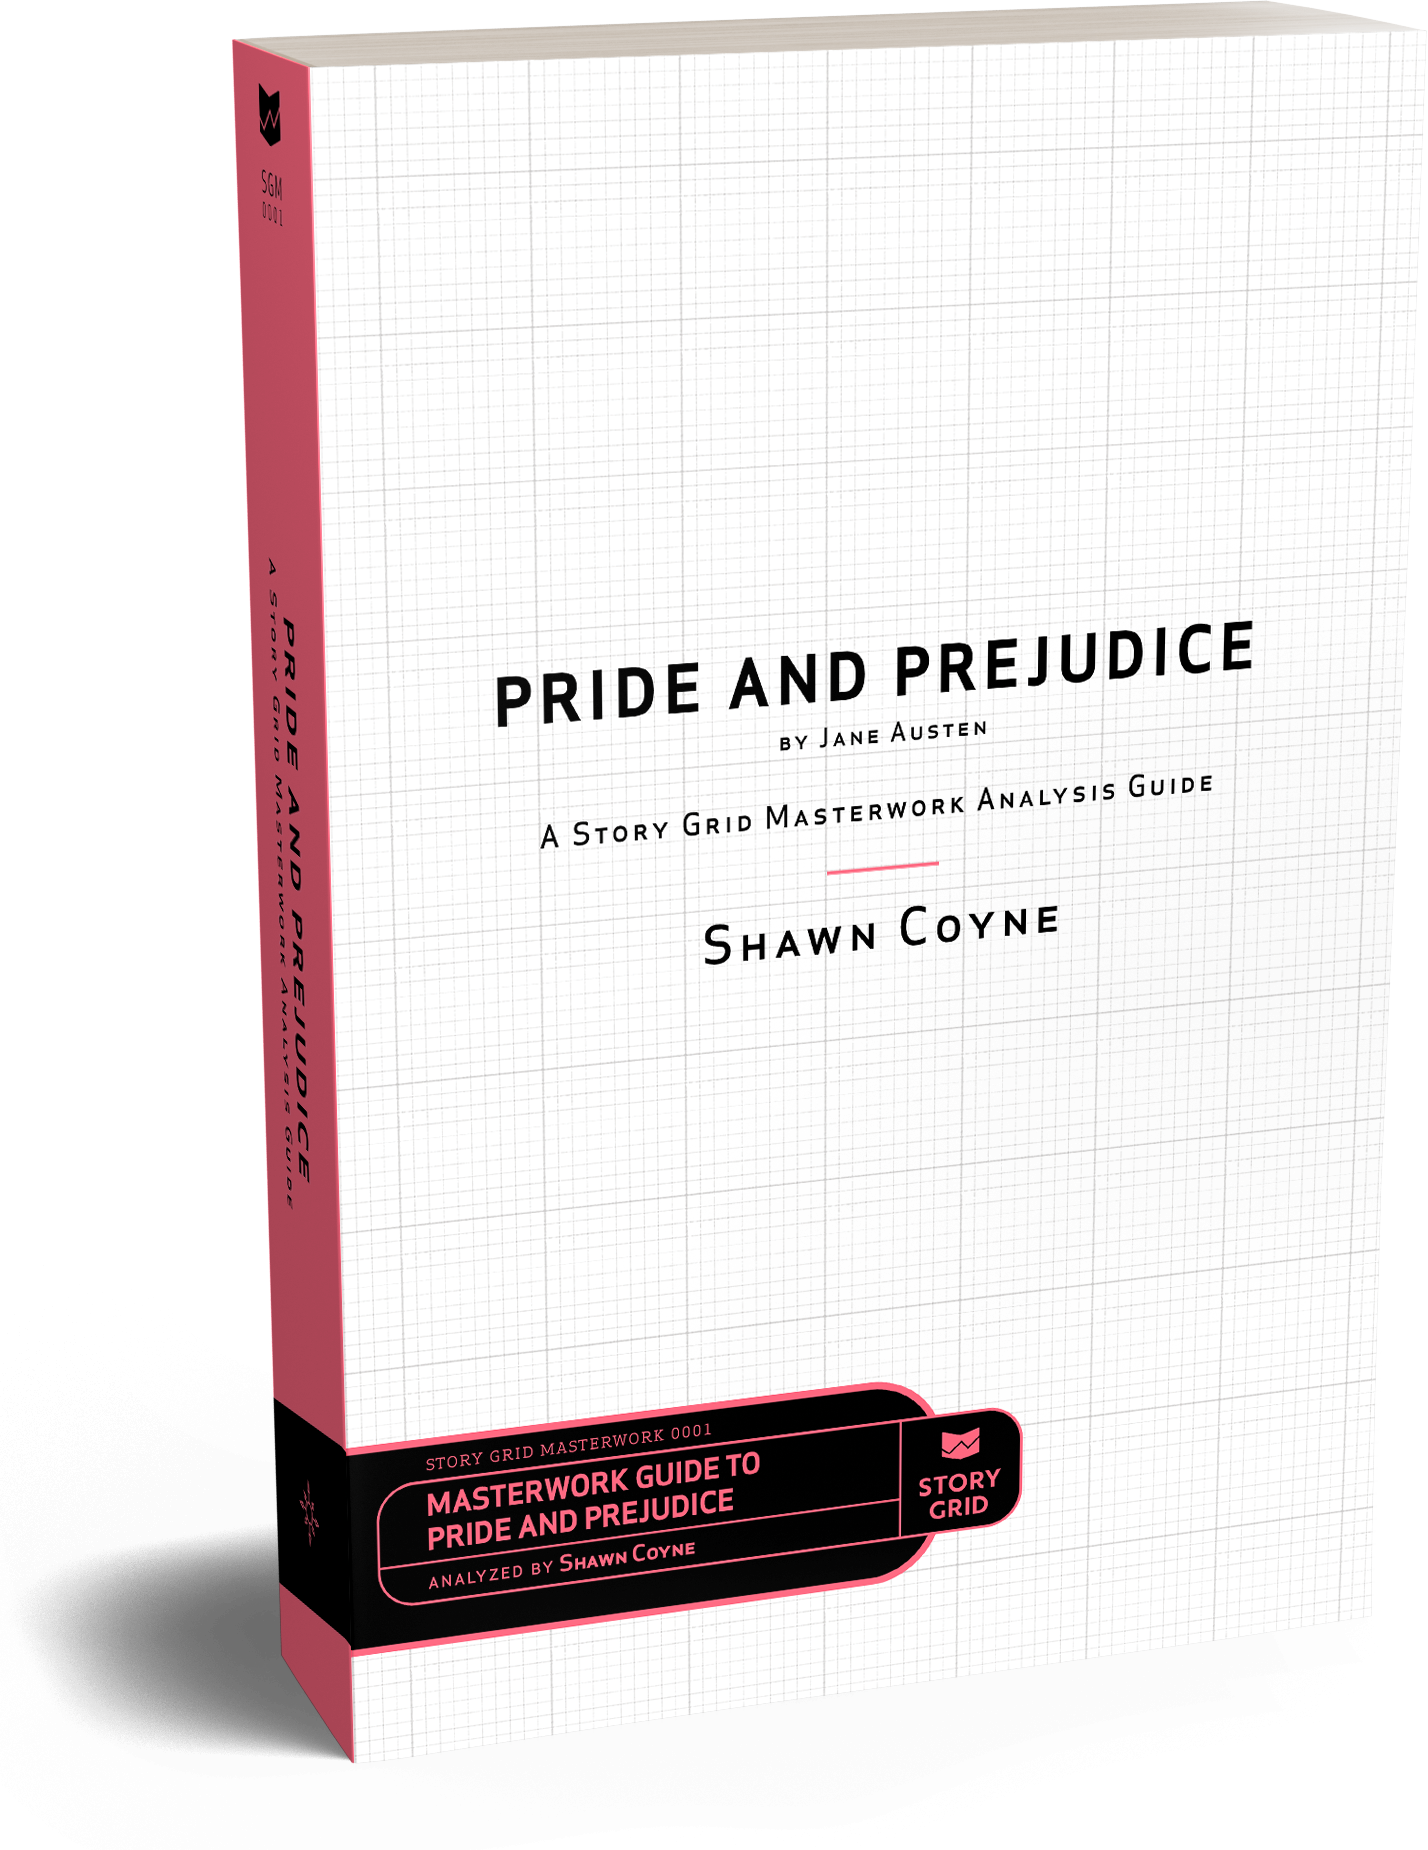 Masterwork Analysis of Pride and Prejudice